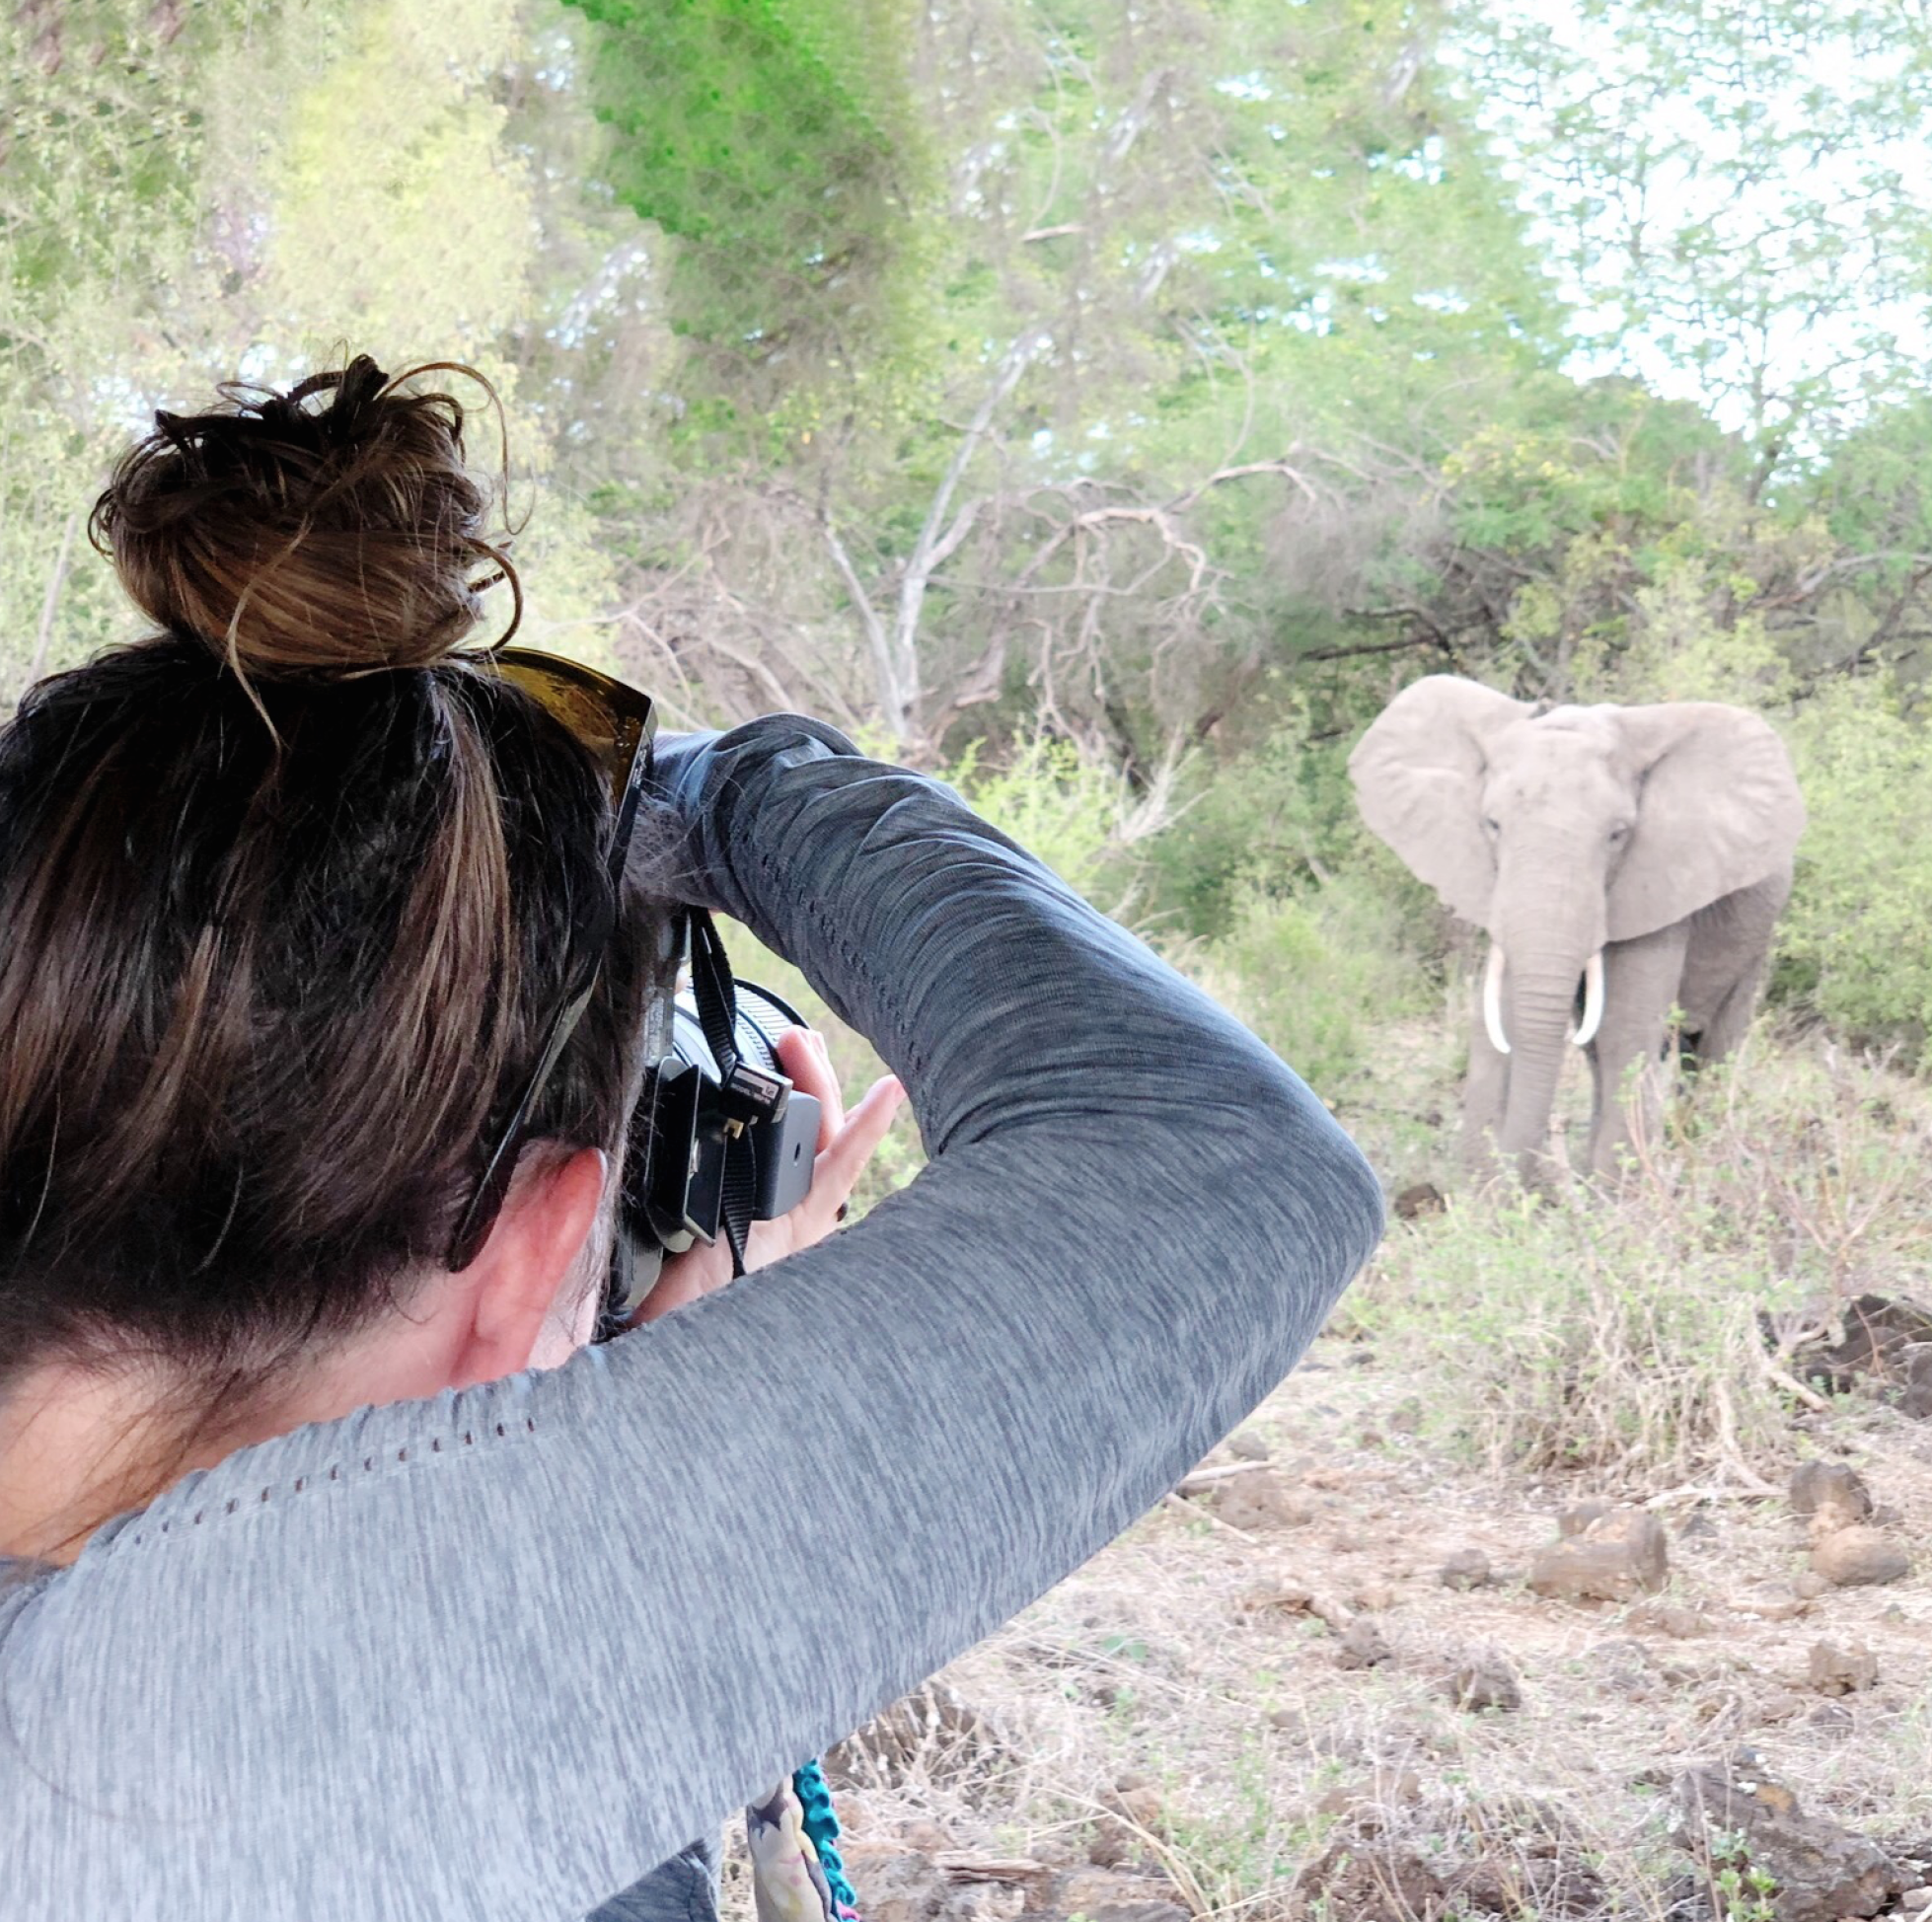 Our Stay At Finch Hattons Luxury Camp In Tsavo National Park, Kenya - Kenya Safari - Kenya Safari Tours - Safari Kenya - Safari Trips In Kenya - Trip To Kenya - Kenyan Safari - How To Plan A Safari - Kenya Safari Guide - Kenya Wildlife - Kenya Trip - Travel To Kenya - Guide To Kenya